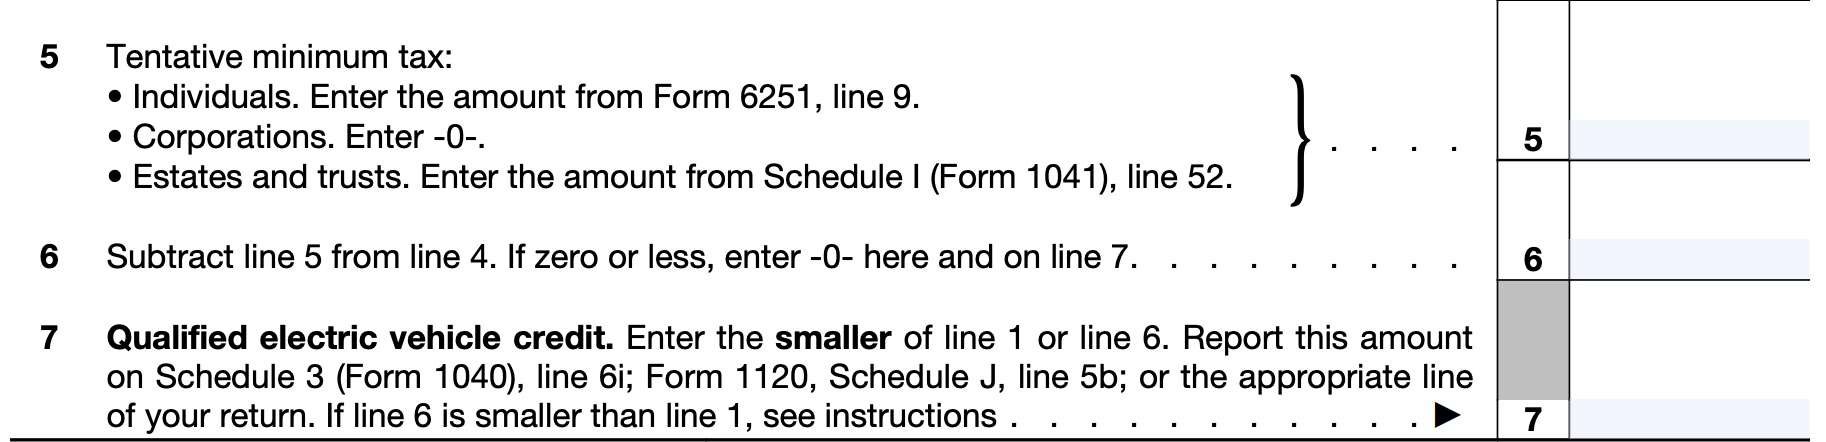 irs form 8834, lines 5 through 7